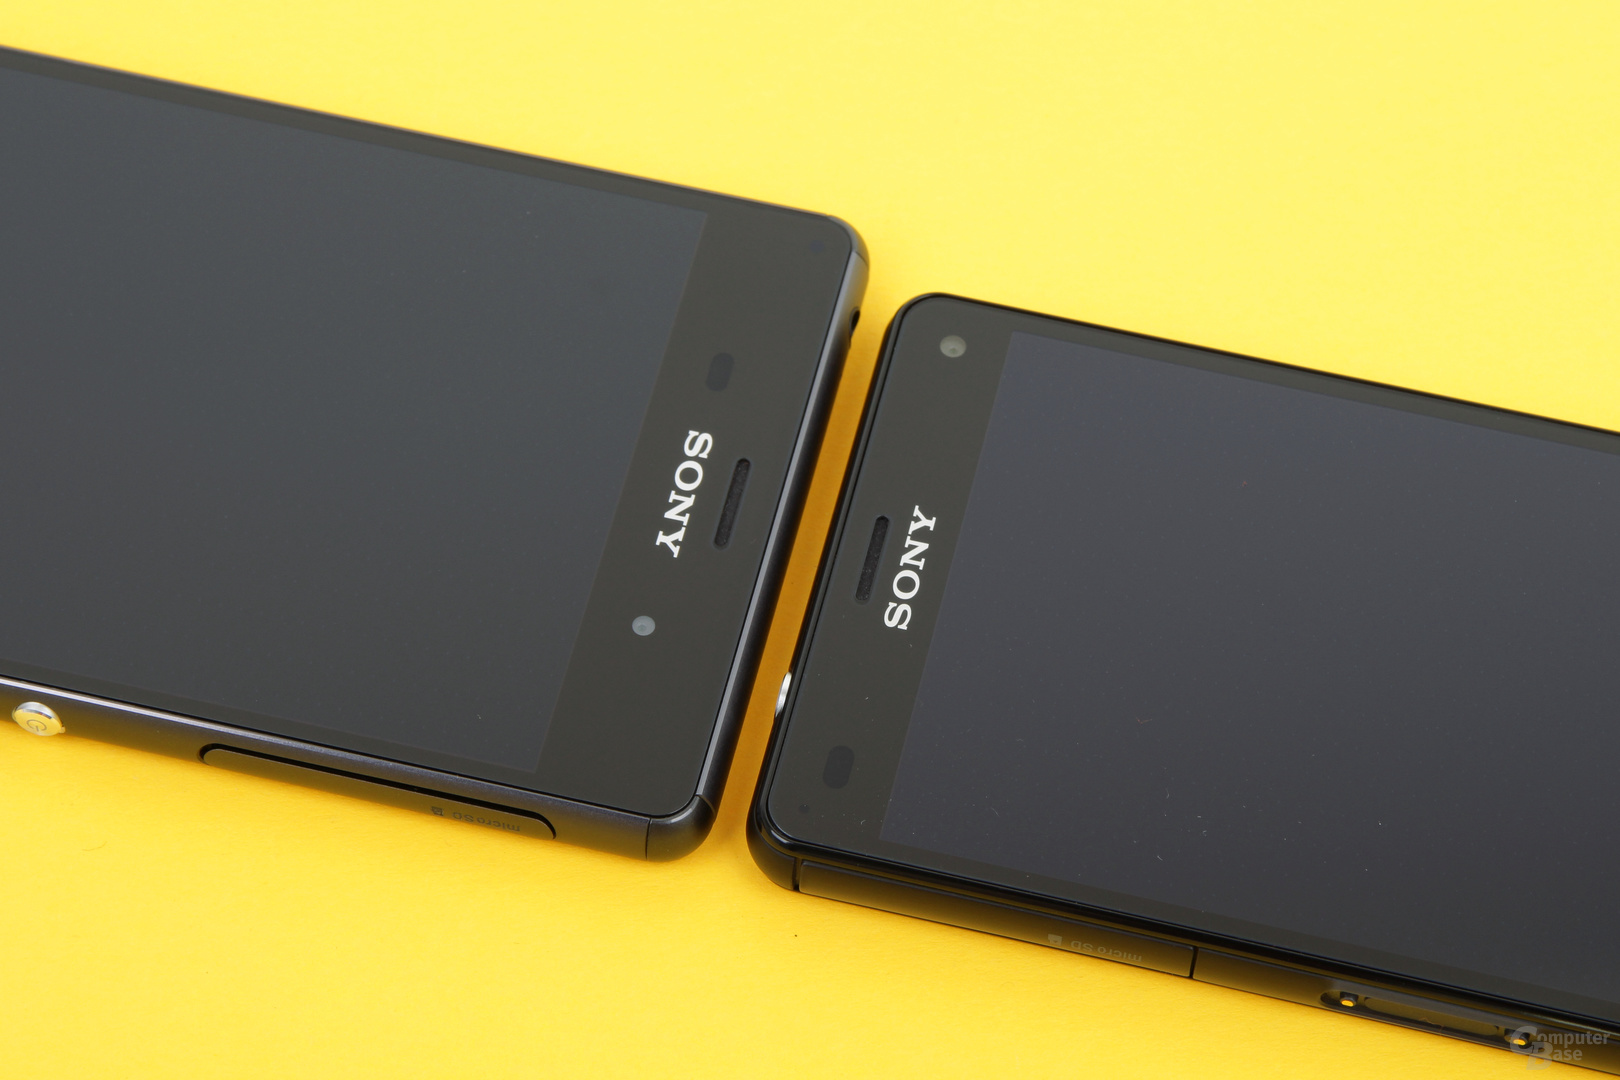 Sony Xperia Z3 und Xperia Z3 Compact im Vergleich